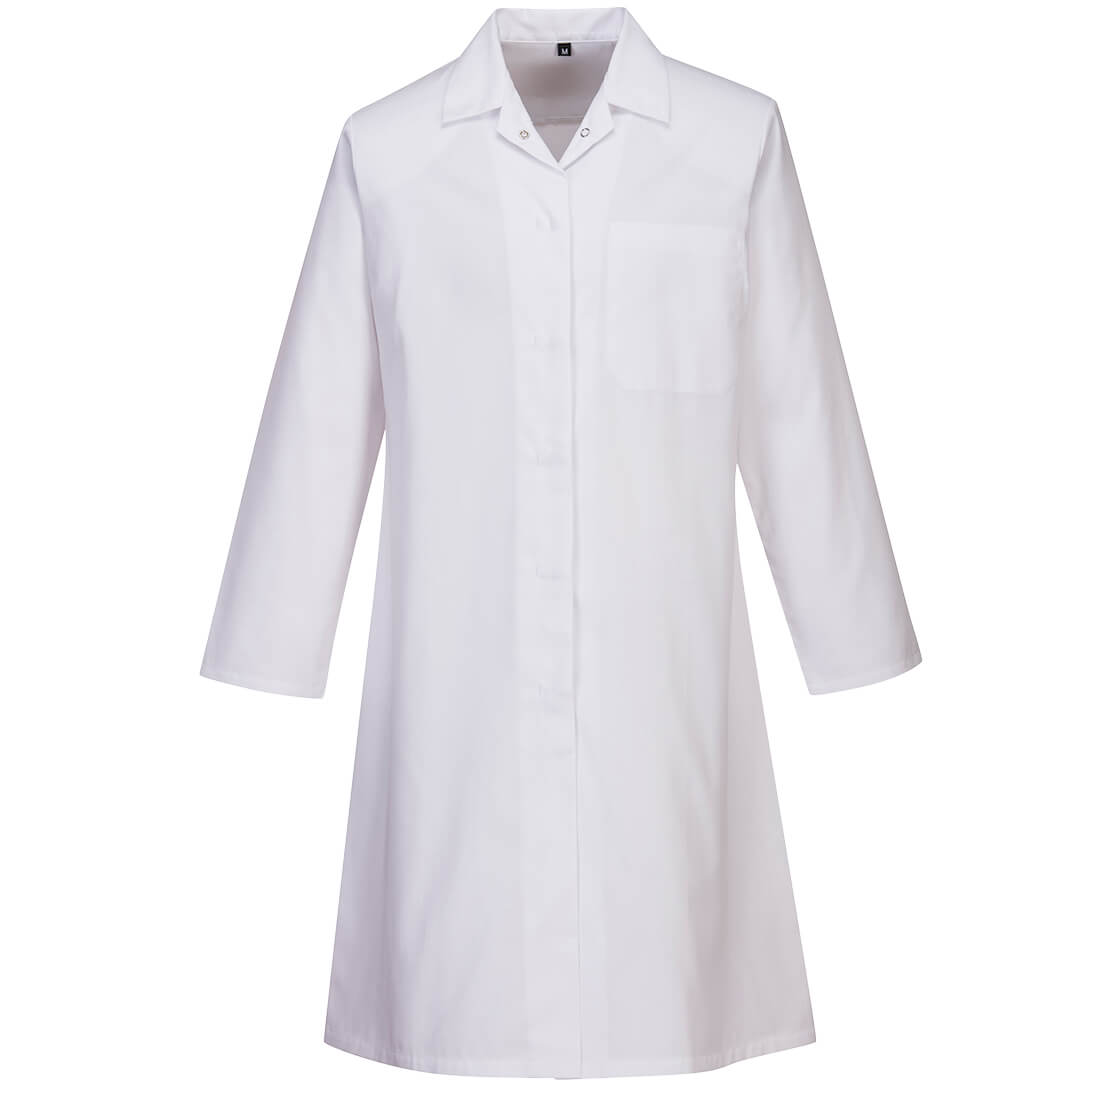 Portwest 2205 - White Ladies Food Industry Coat, One Pocket sz Medium Regular Apron jacket